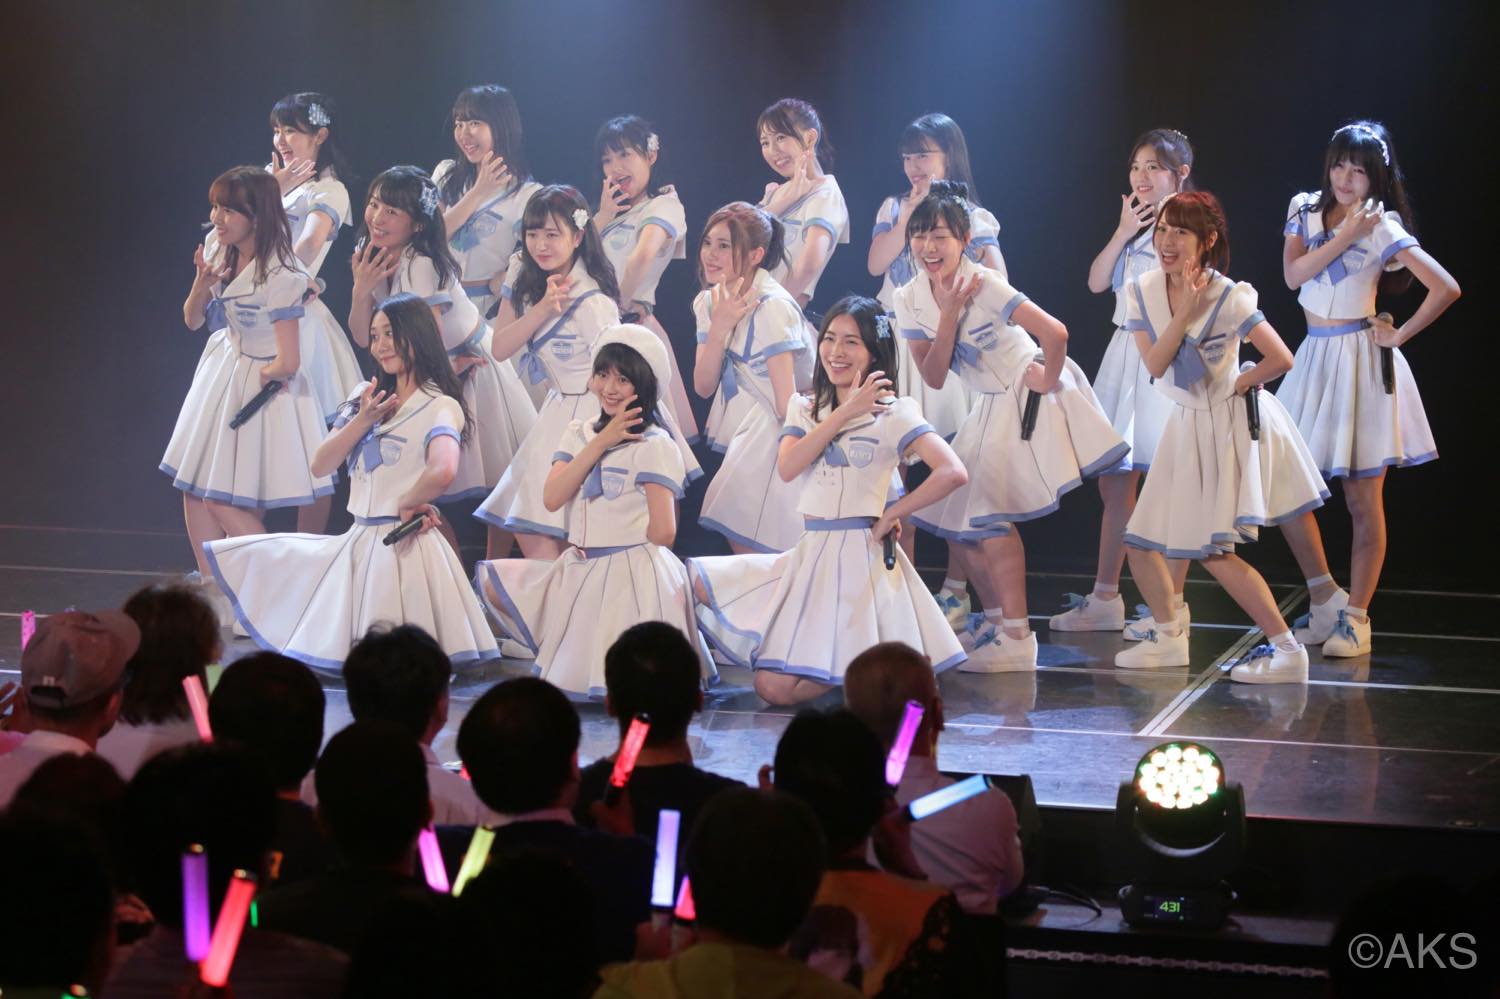 SKE48 Debut 21st Single “Igai ni Mango” at Fan Thanksgiving Event at SKE48 Theater!